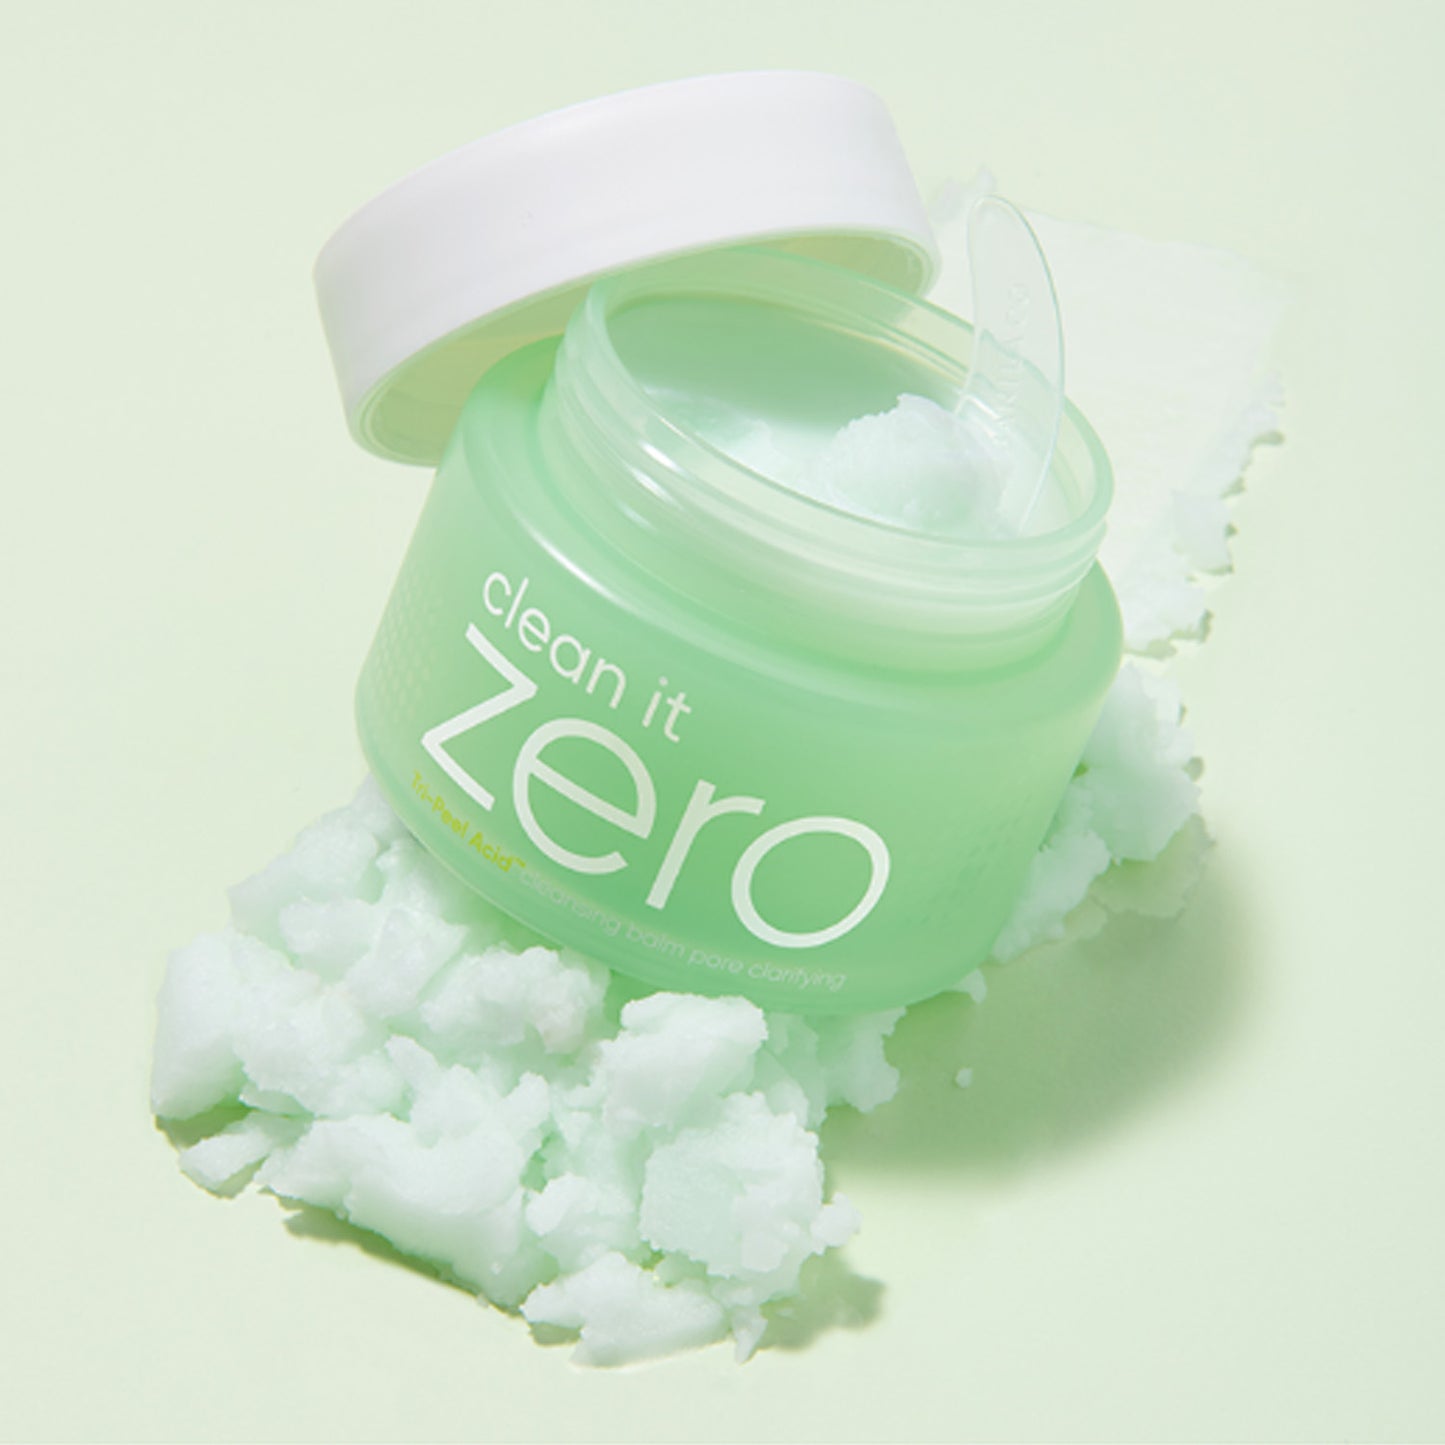 [Banila co] Clean It Zero Cleansing Balm Pore Clarifying 100ml